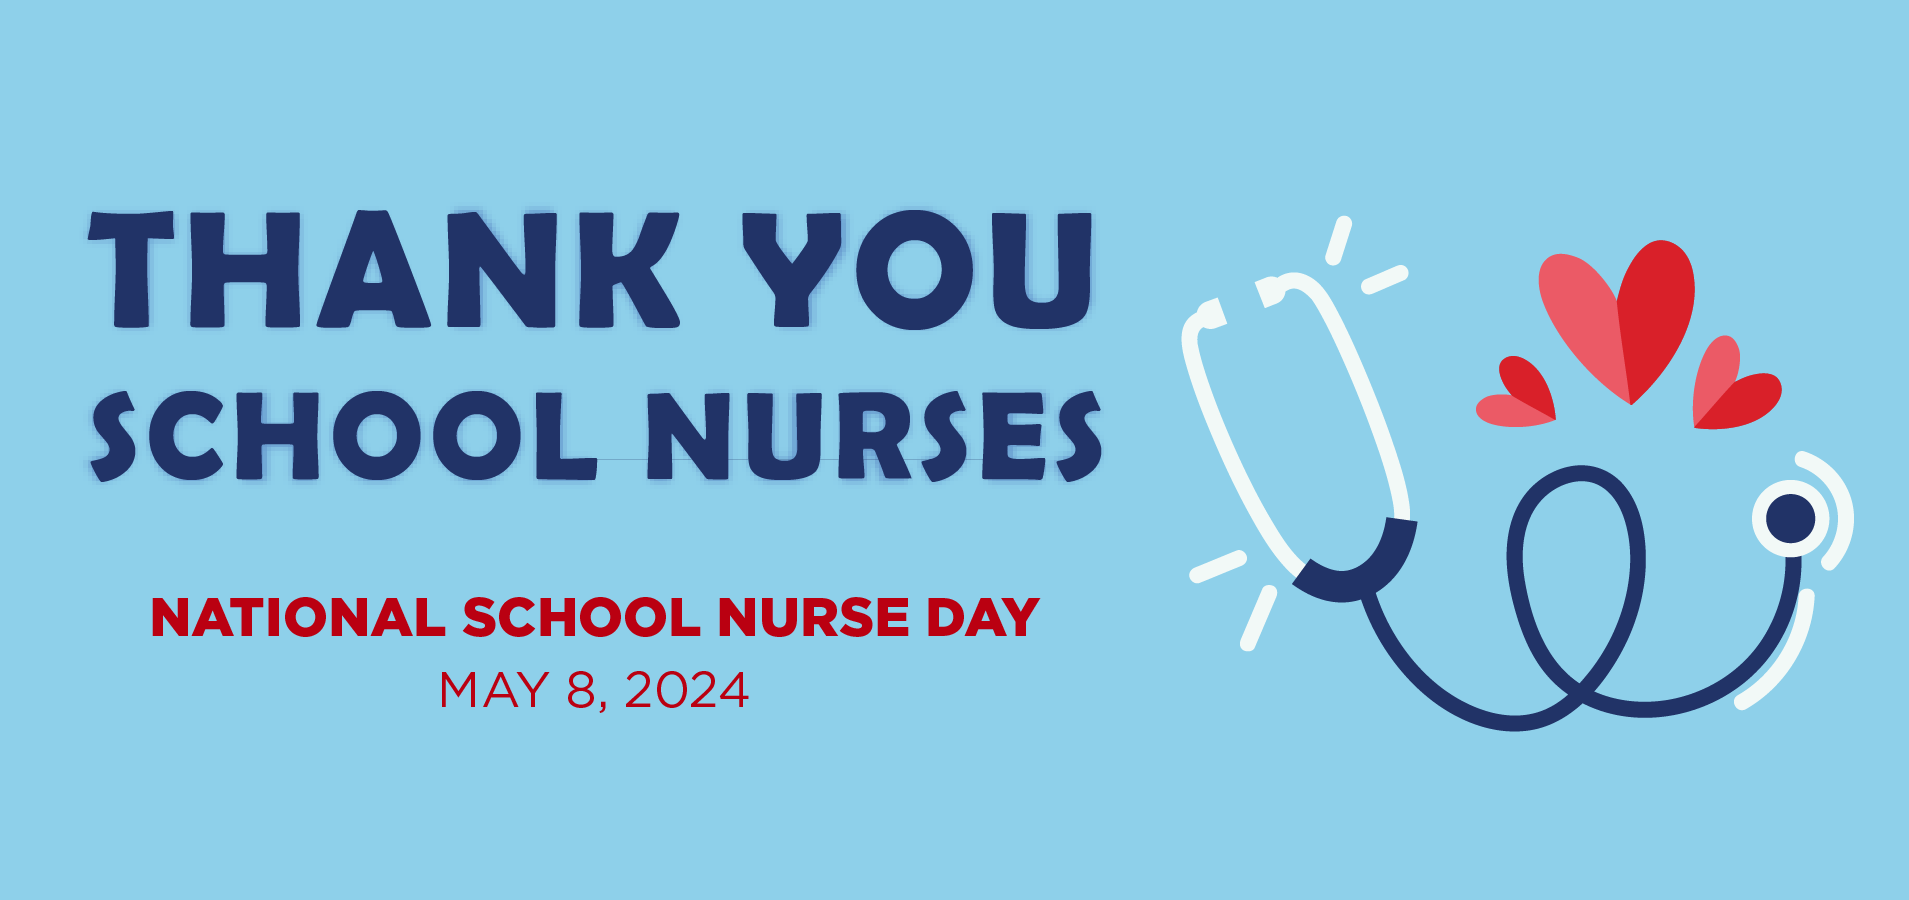 Thank you School Nurses! National School Nurse Day is May 8, 2024.